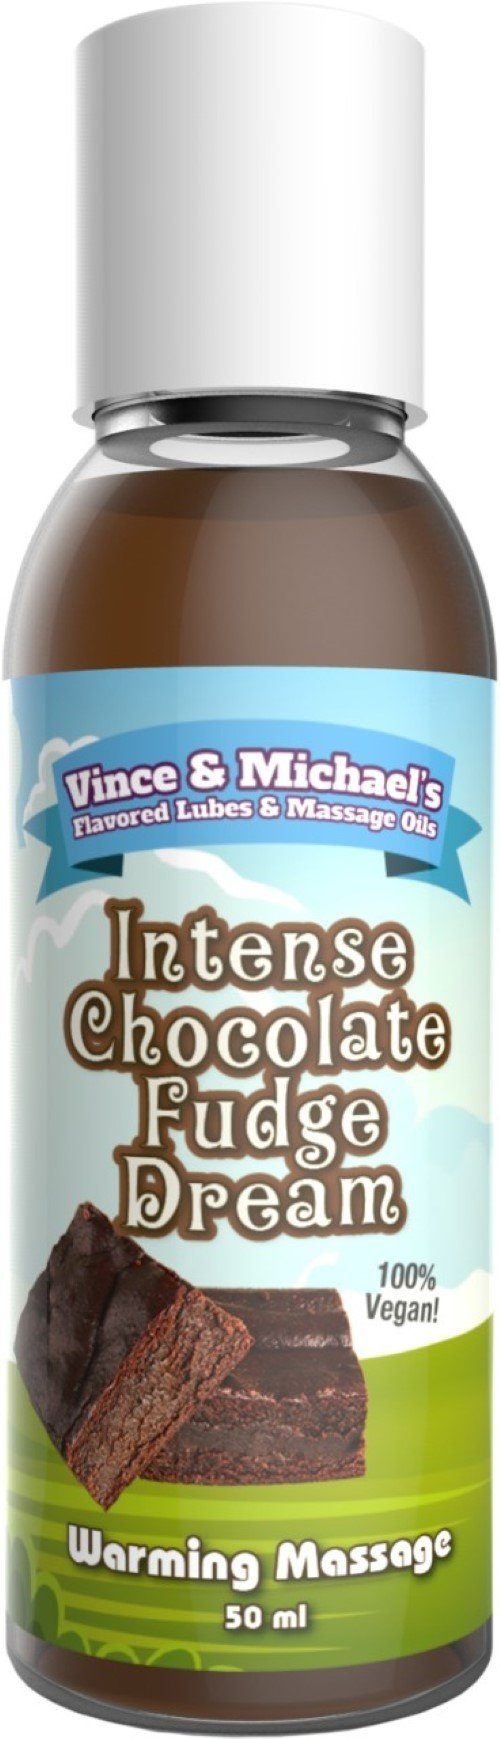 50 ml Gleitgel & 50ml - Vince Chocolate Michael´s Intense Warming MICHAEL's Fudge Dream & VINCE